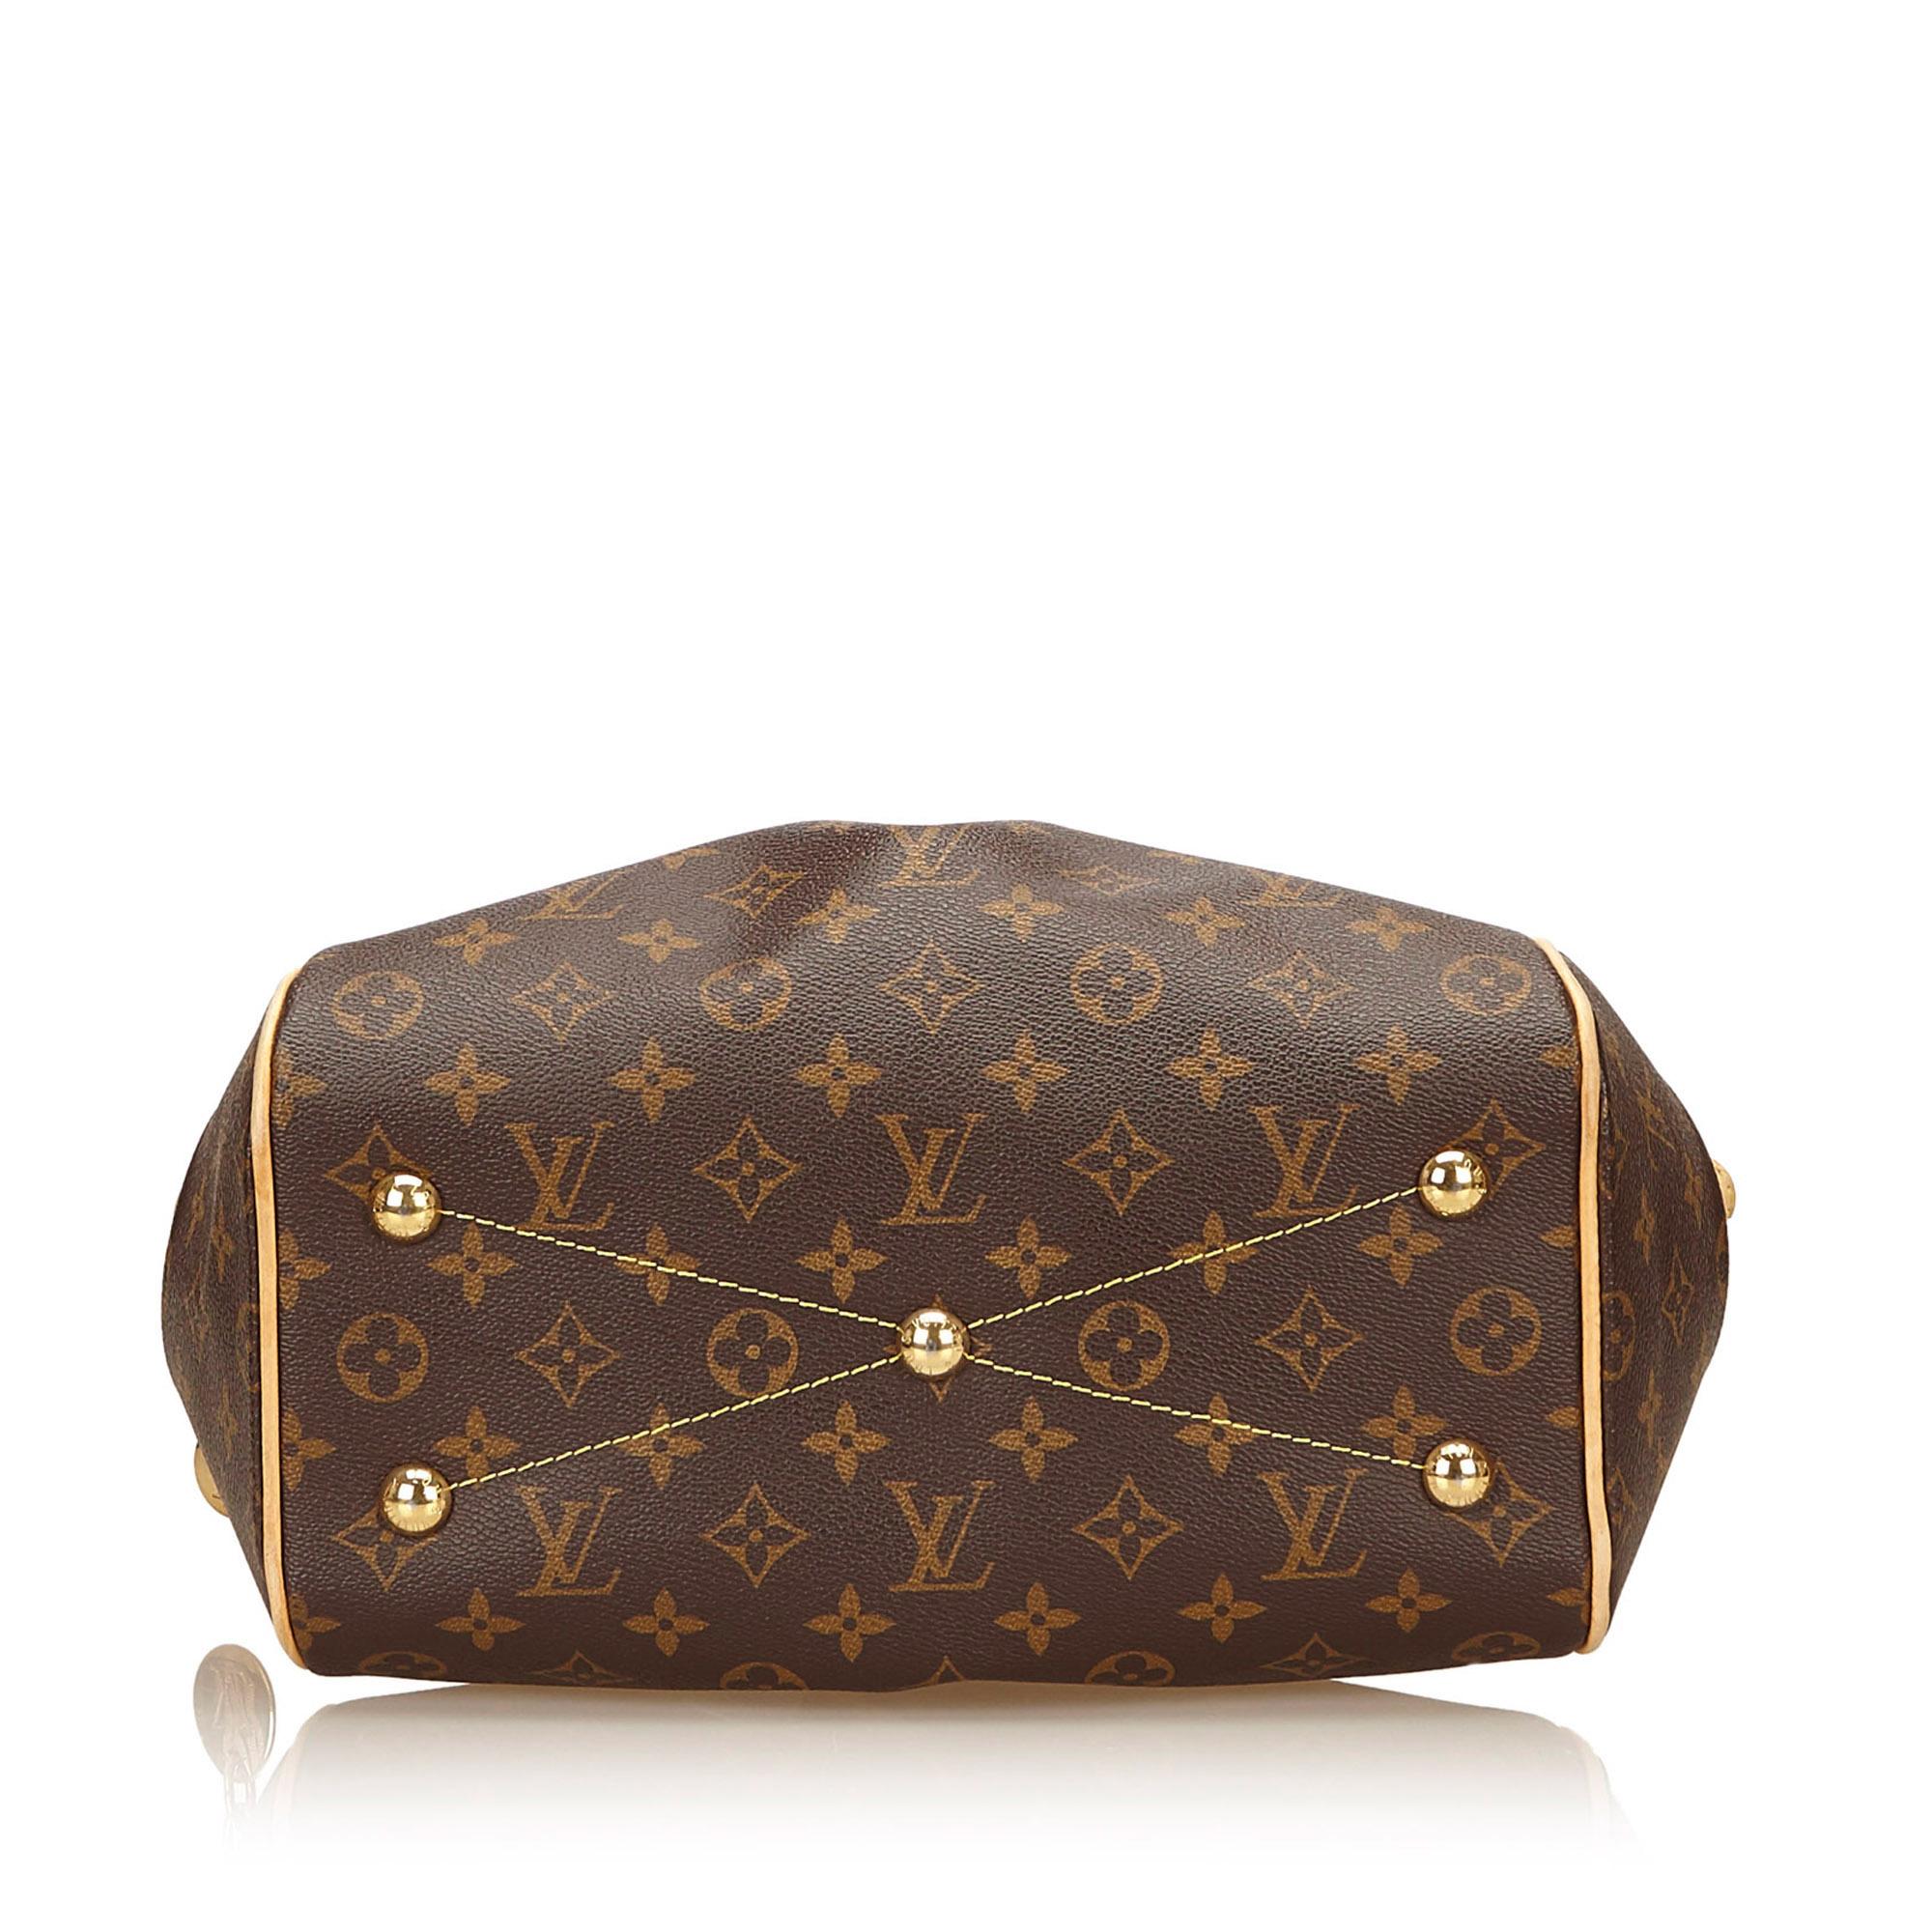 Louis Vuitton Monogram Canvas Tivoli Pm Everyday Bag in Brown - Lyst